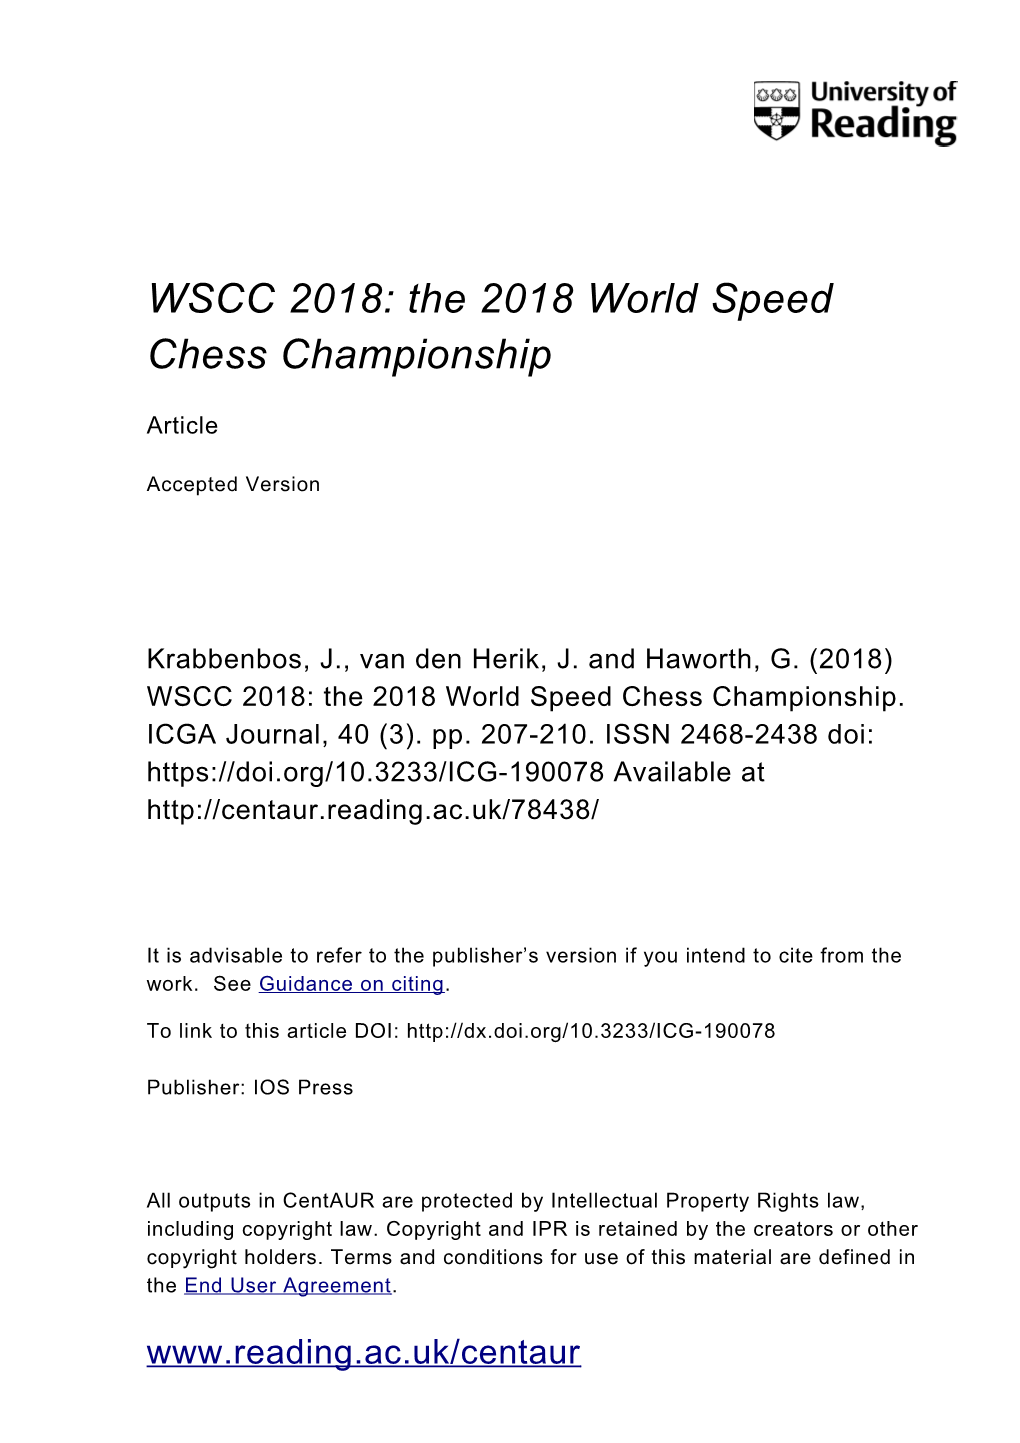 WSCC 2018: the 2018 World Speed Chess Championship